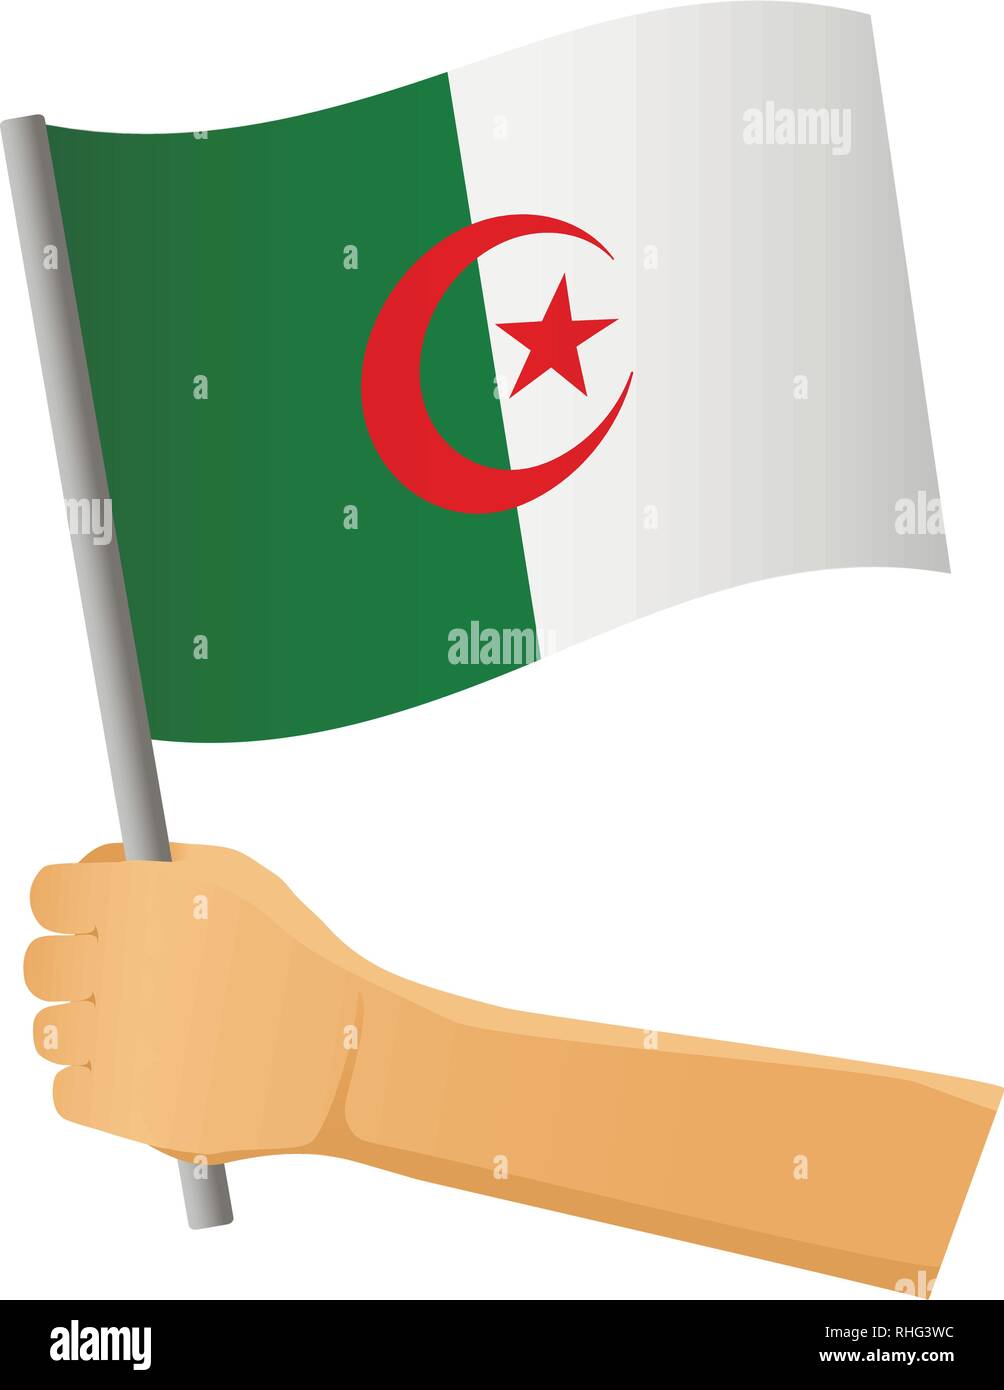 Algeria flag in hand. Patriotic background. National flag of Algeria vector illustration Stock Vector